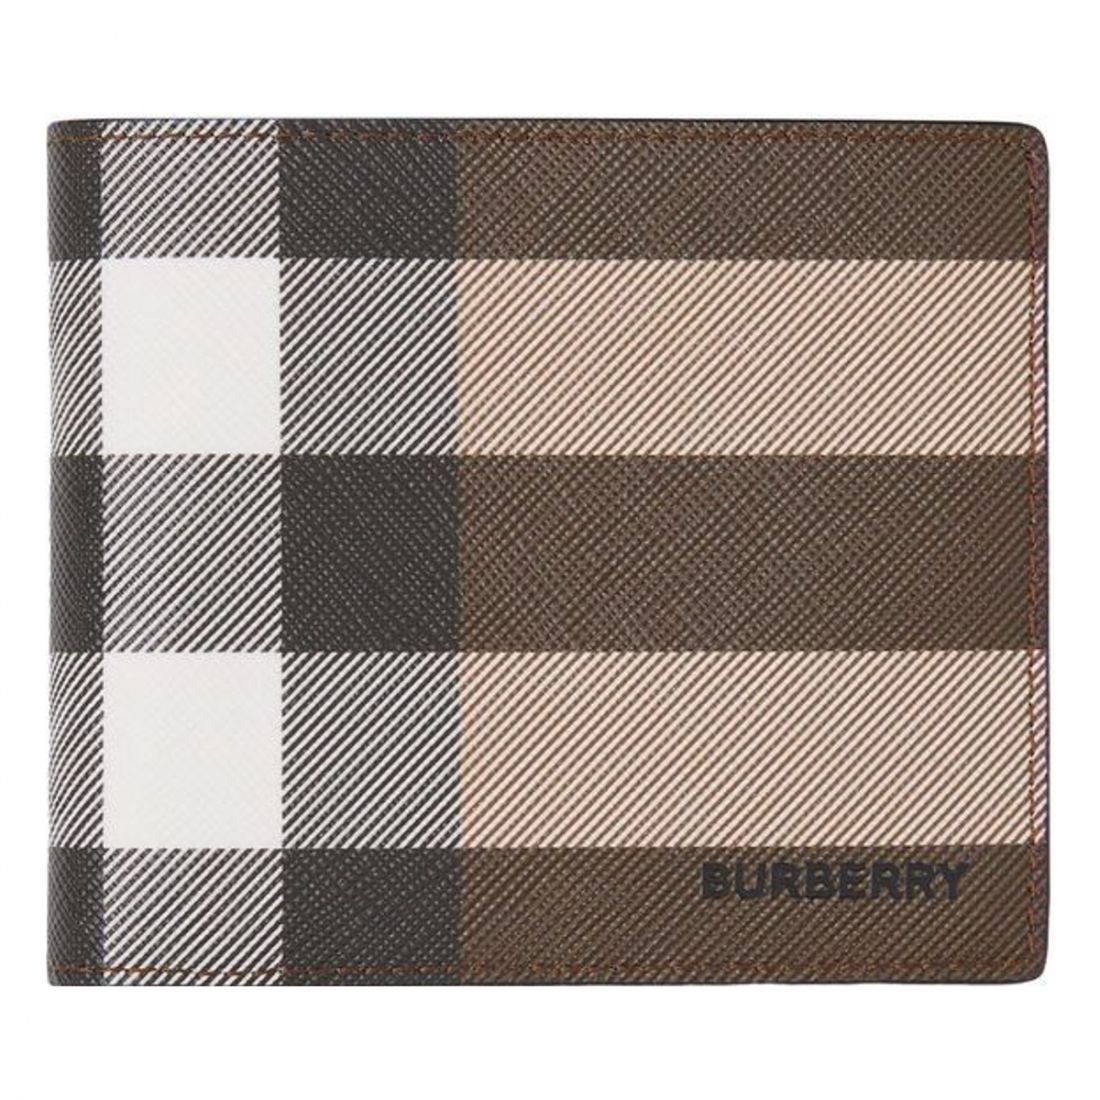 Burberry - Portefeuille 'Check Logo' pour Hommes